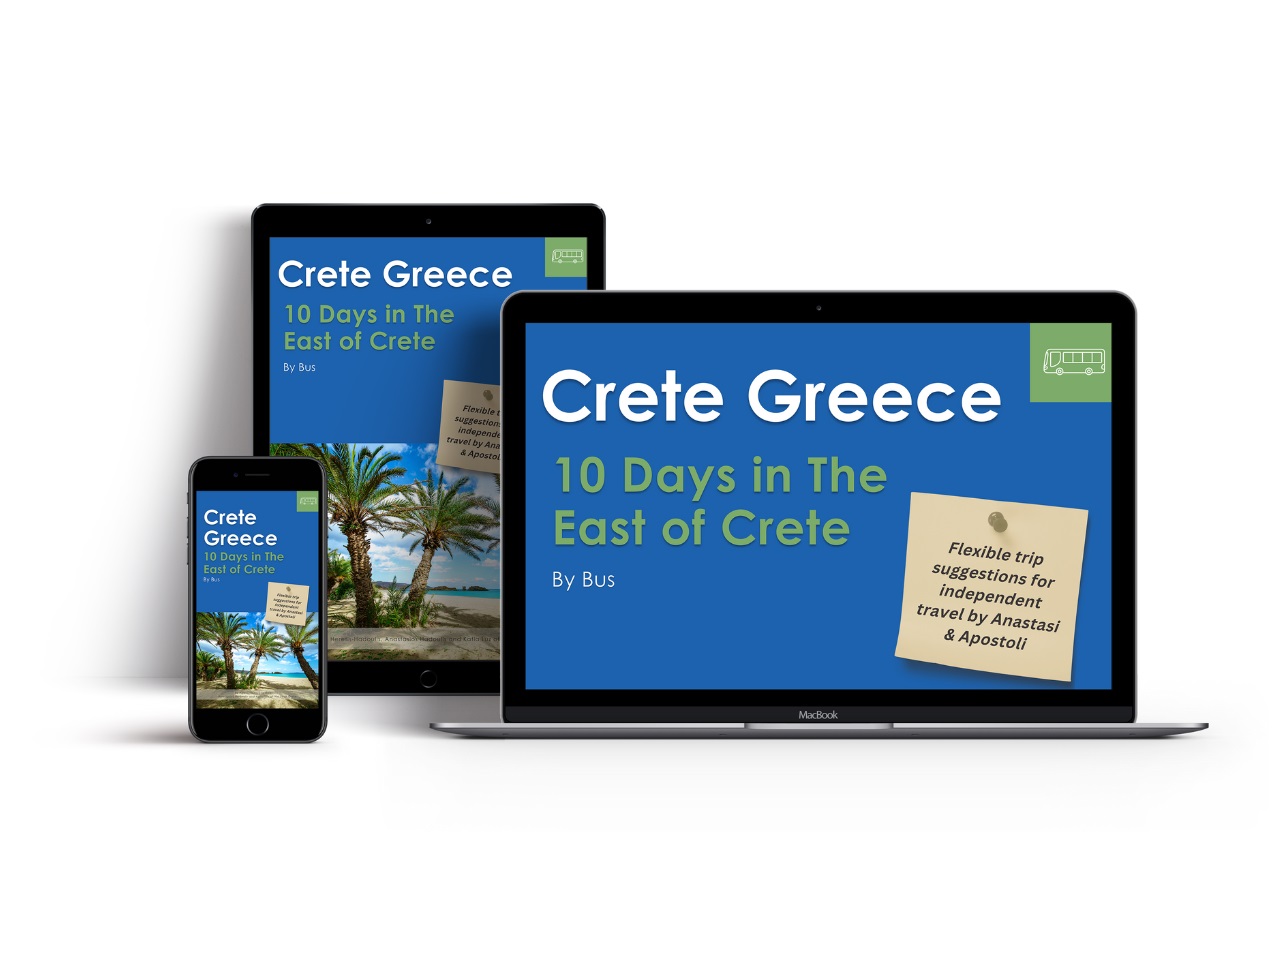 Crete Greece Trip Ideas - East Crete by Bus